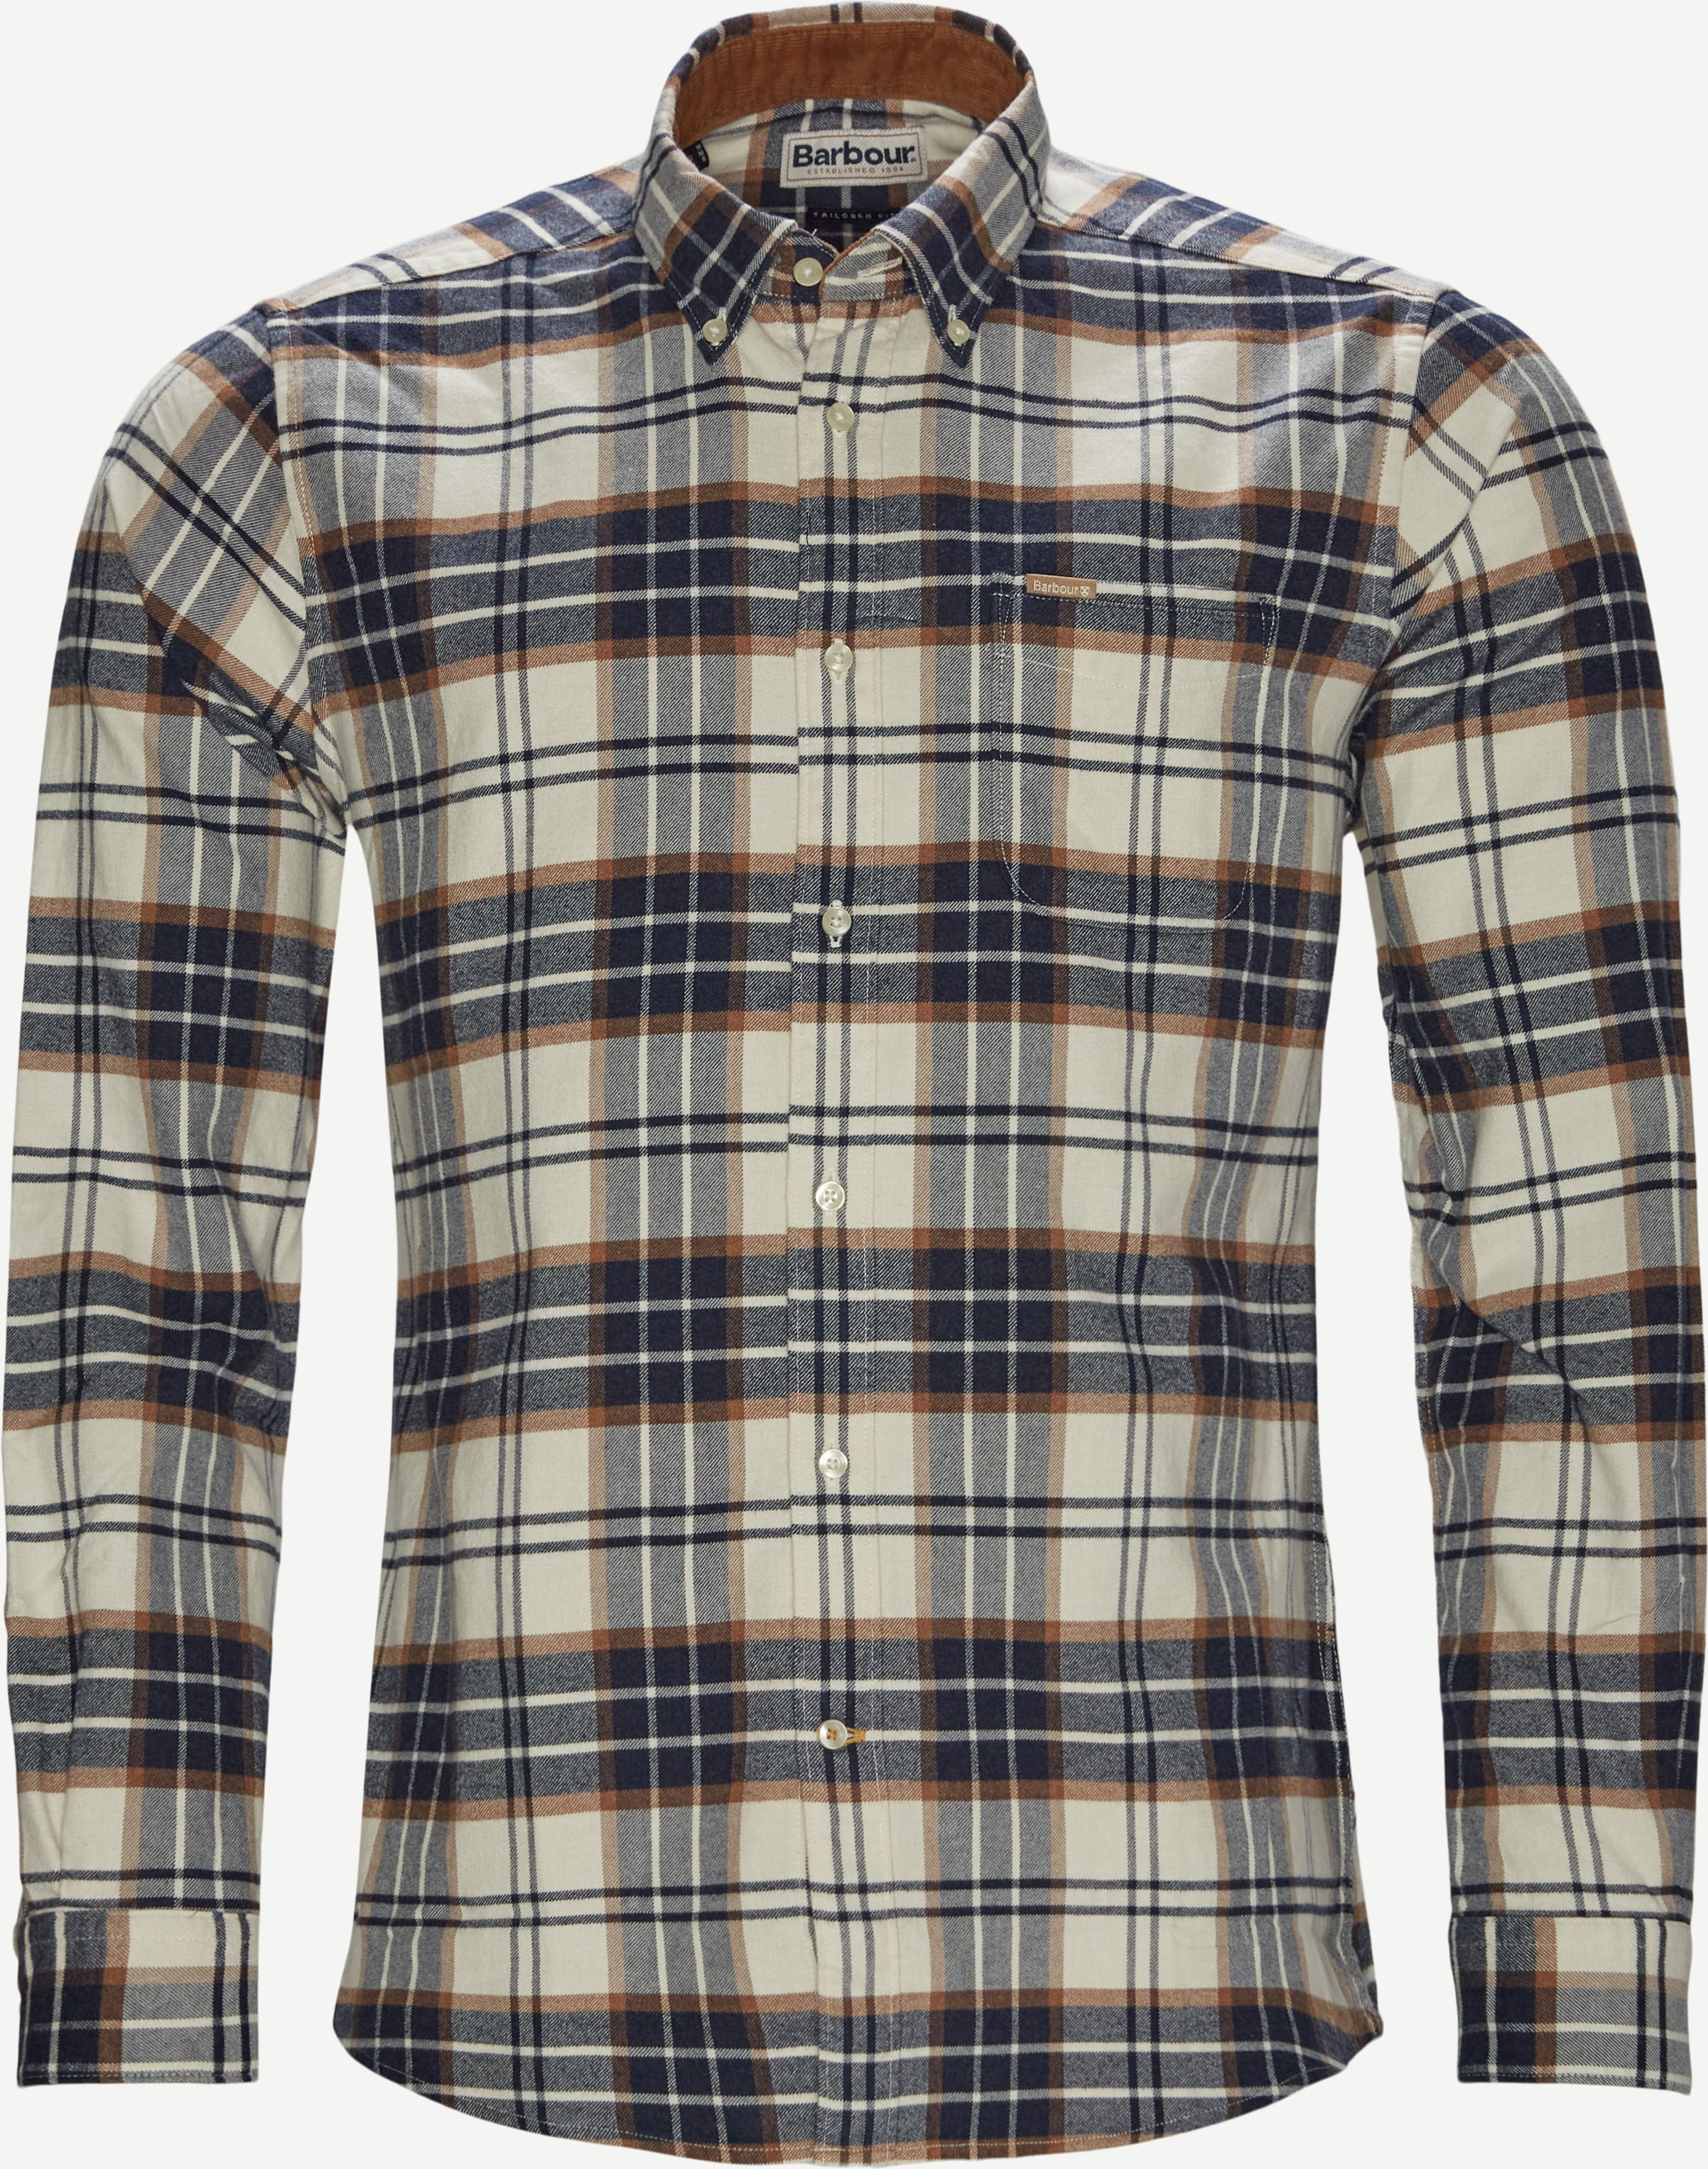 Portdown skjorta - Skjortor - Tailored fit - Sand